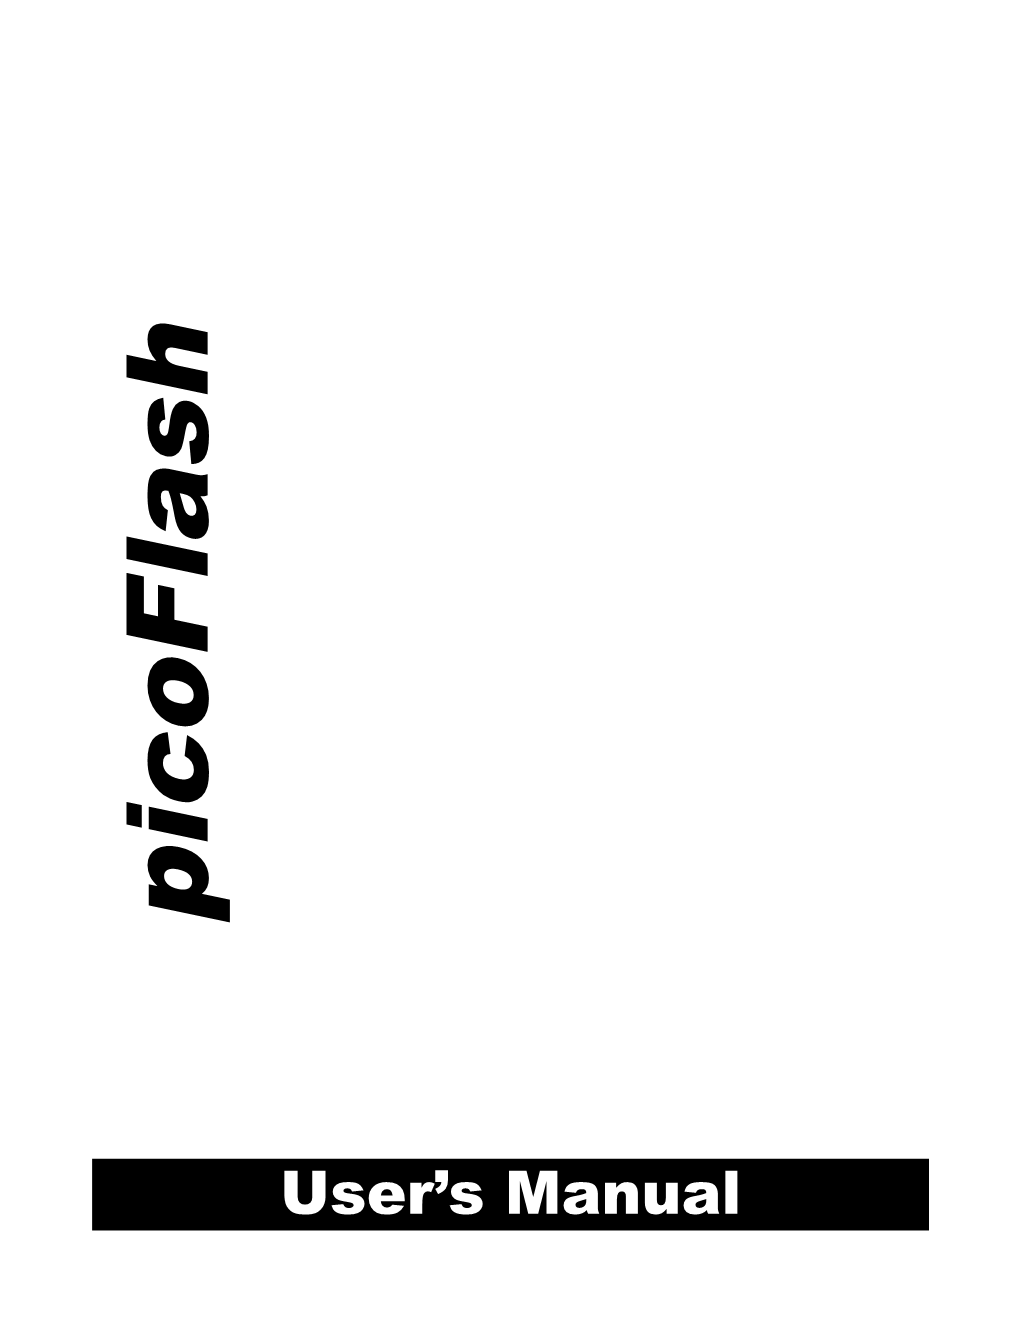 Picoflash User's Manual